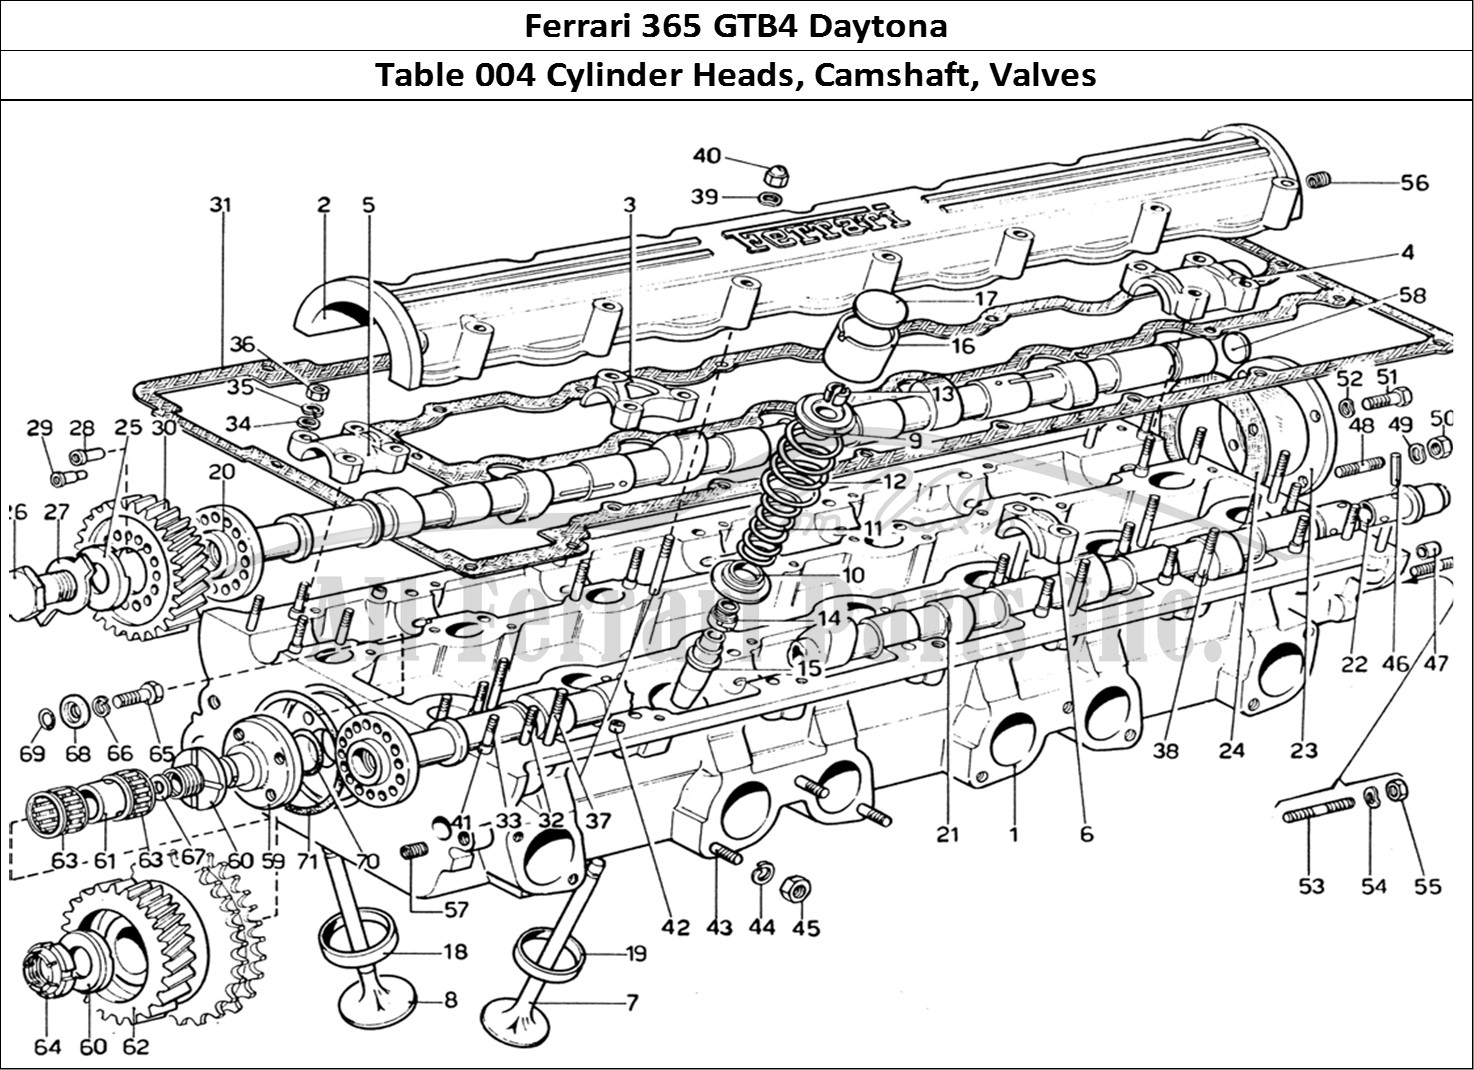 Ferrari Parts Ferrari 365 GTB4 Daytona (1969) Page 004 Cylinder Heads - Camshaft